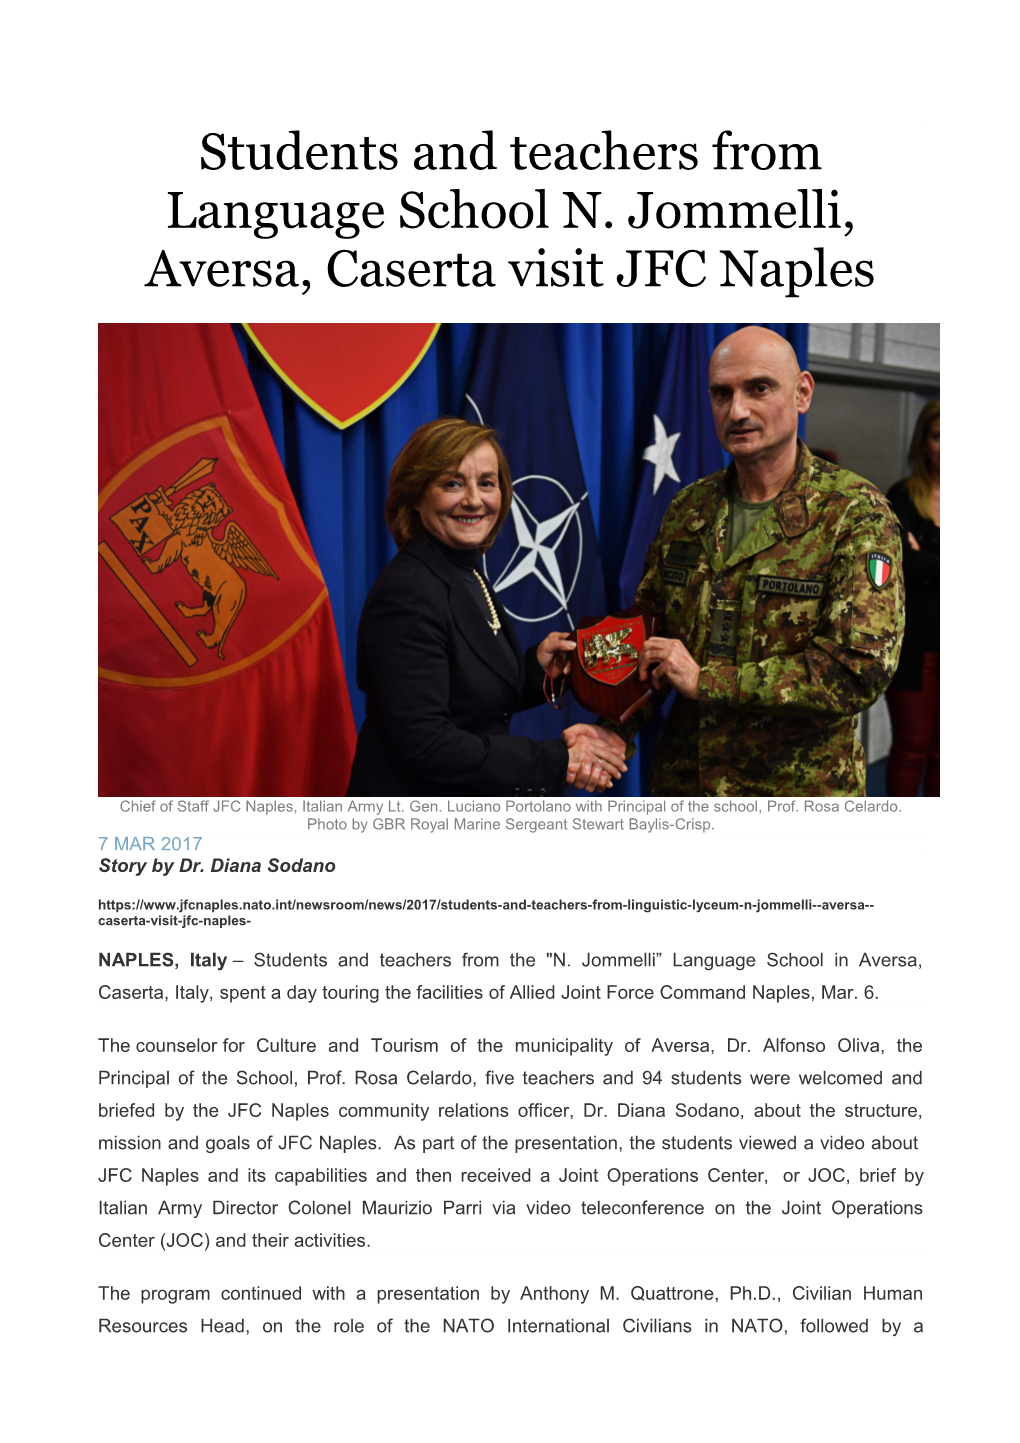 Students and Teachers from Language School N. Jommelli, Aversa, Caserta Visit JFC Naples